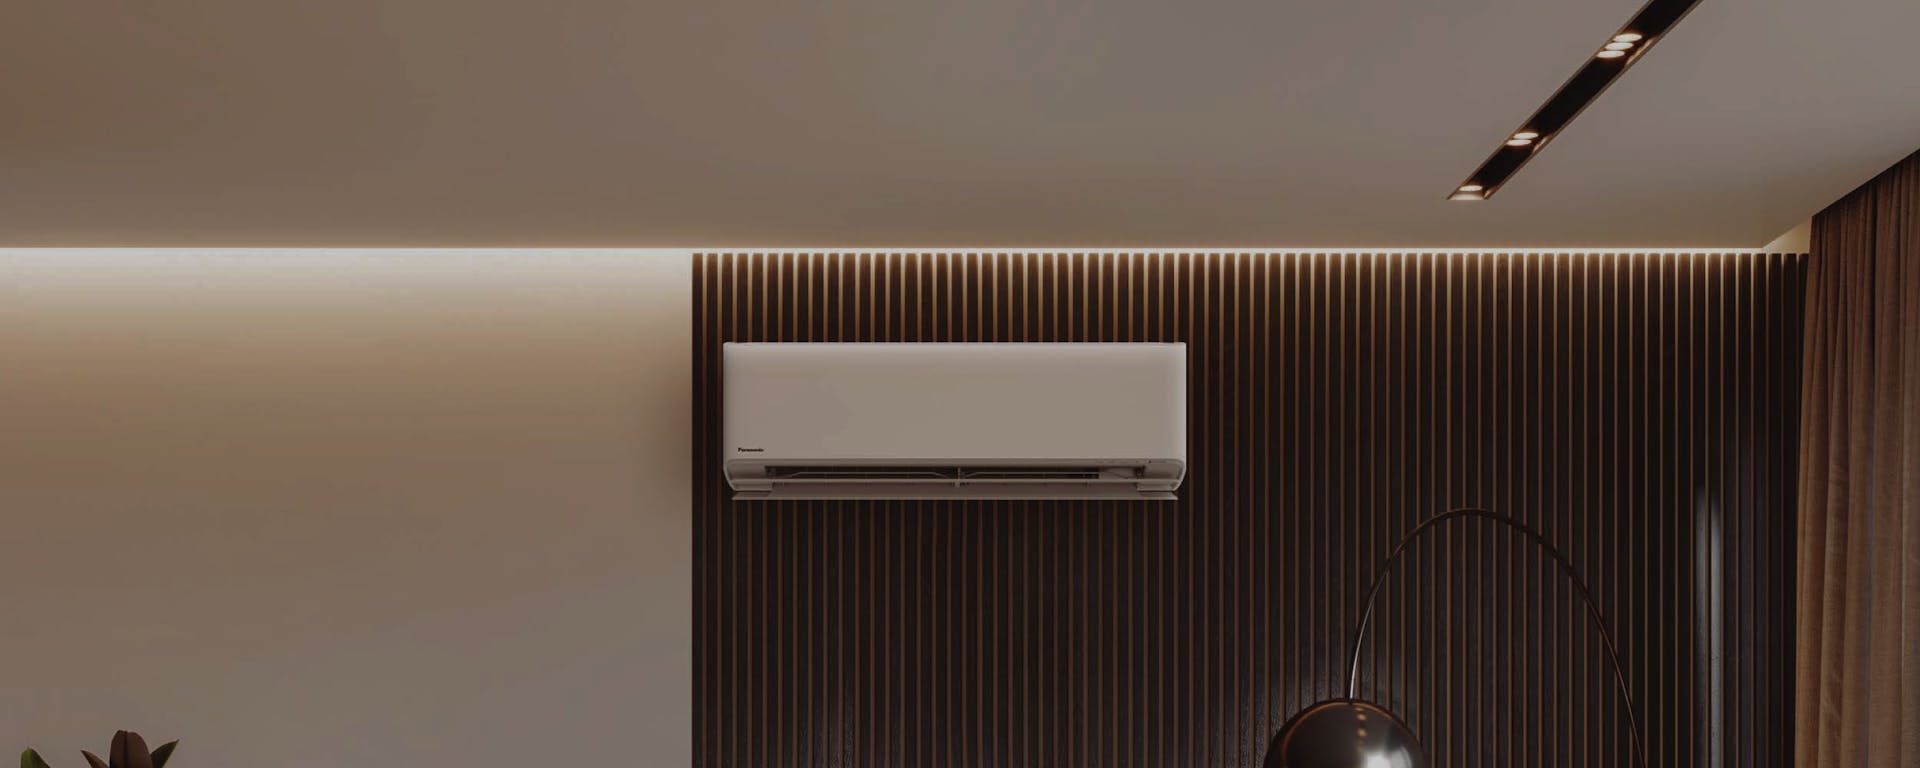 Heating-control-carousel Panasonic-heatpumps